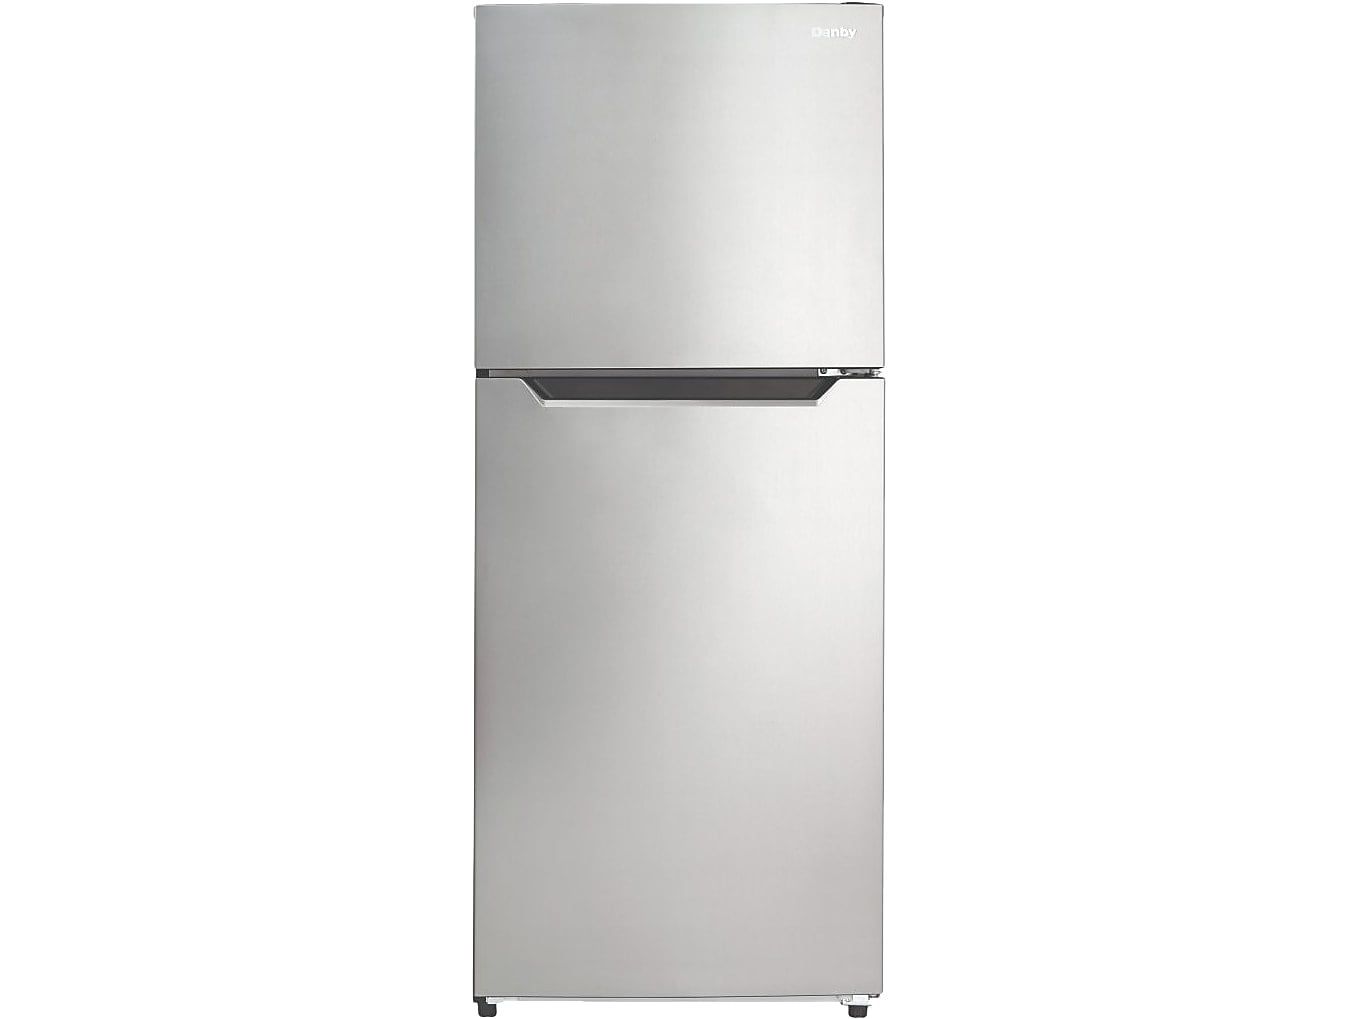 10.1-Cubic-Foot Top-Freezer Refrigerator 